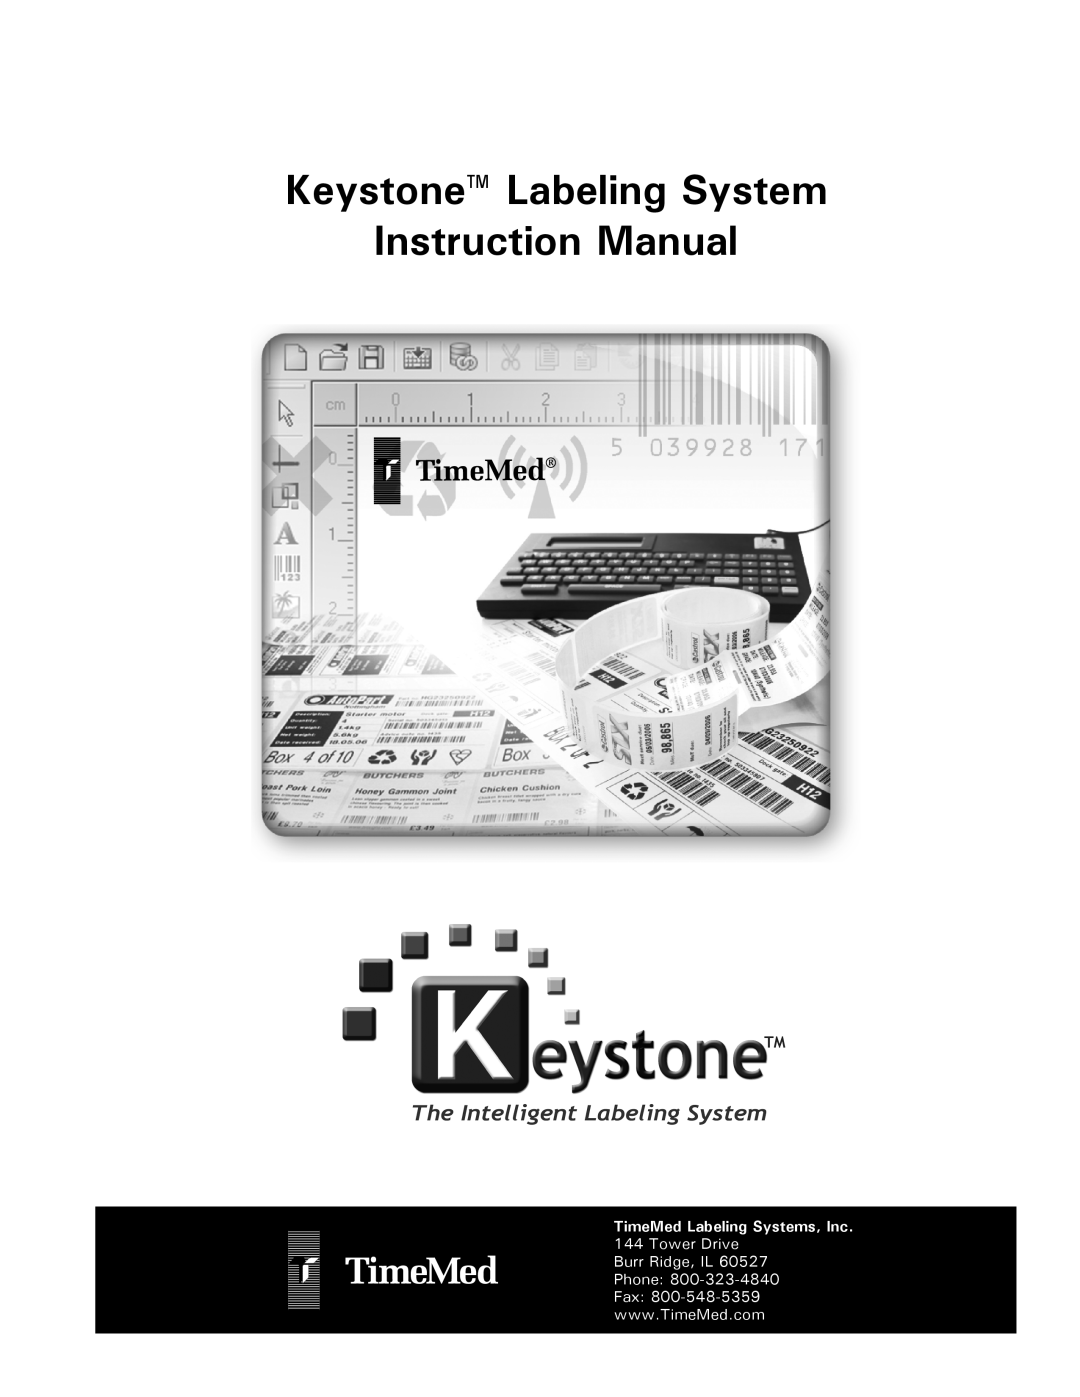 Keystone Computer Keyboard manual Keystone Labeling System Instruction Manual, TimeMed Labeling Systems, Inc 